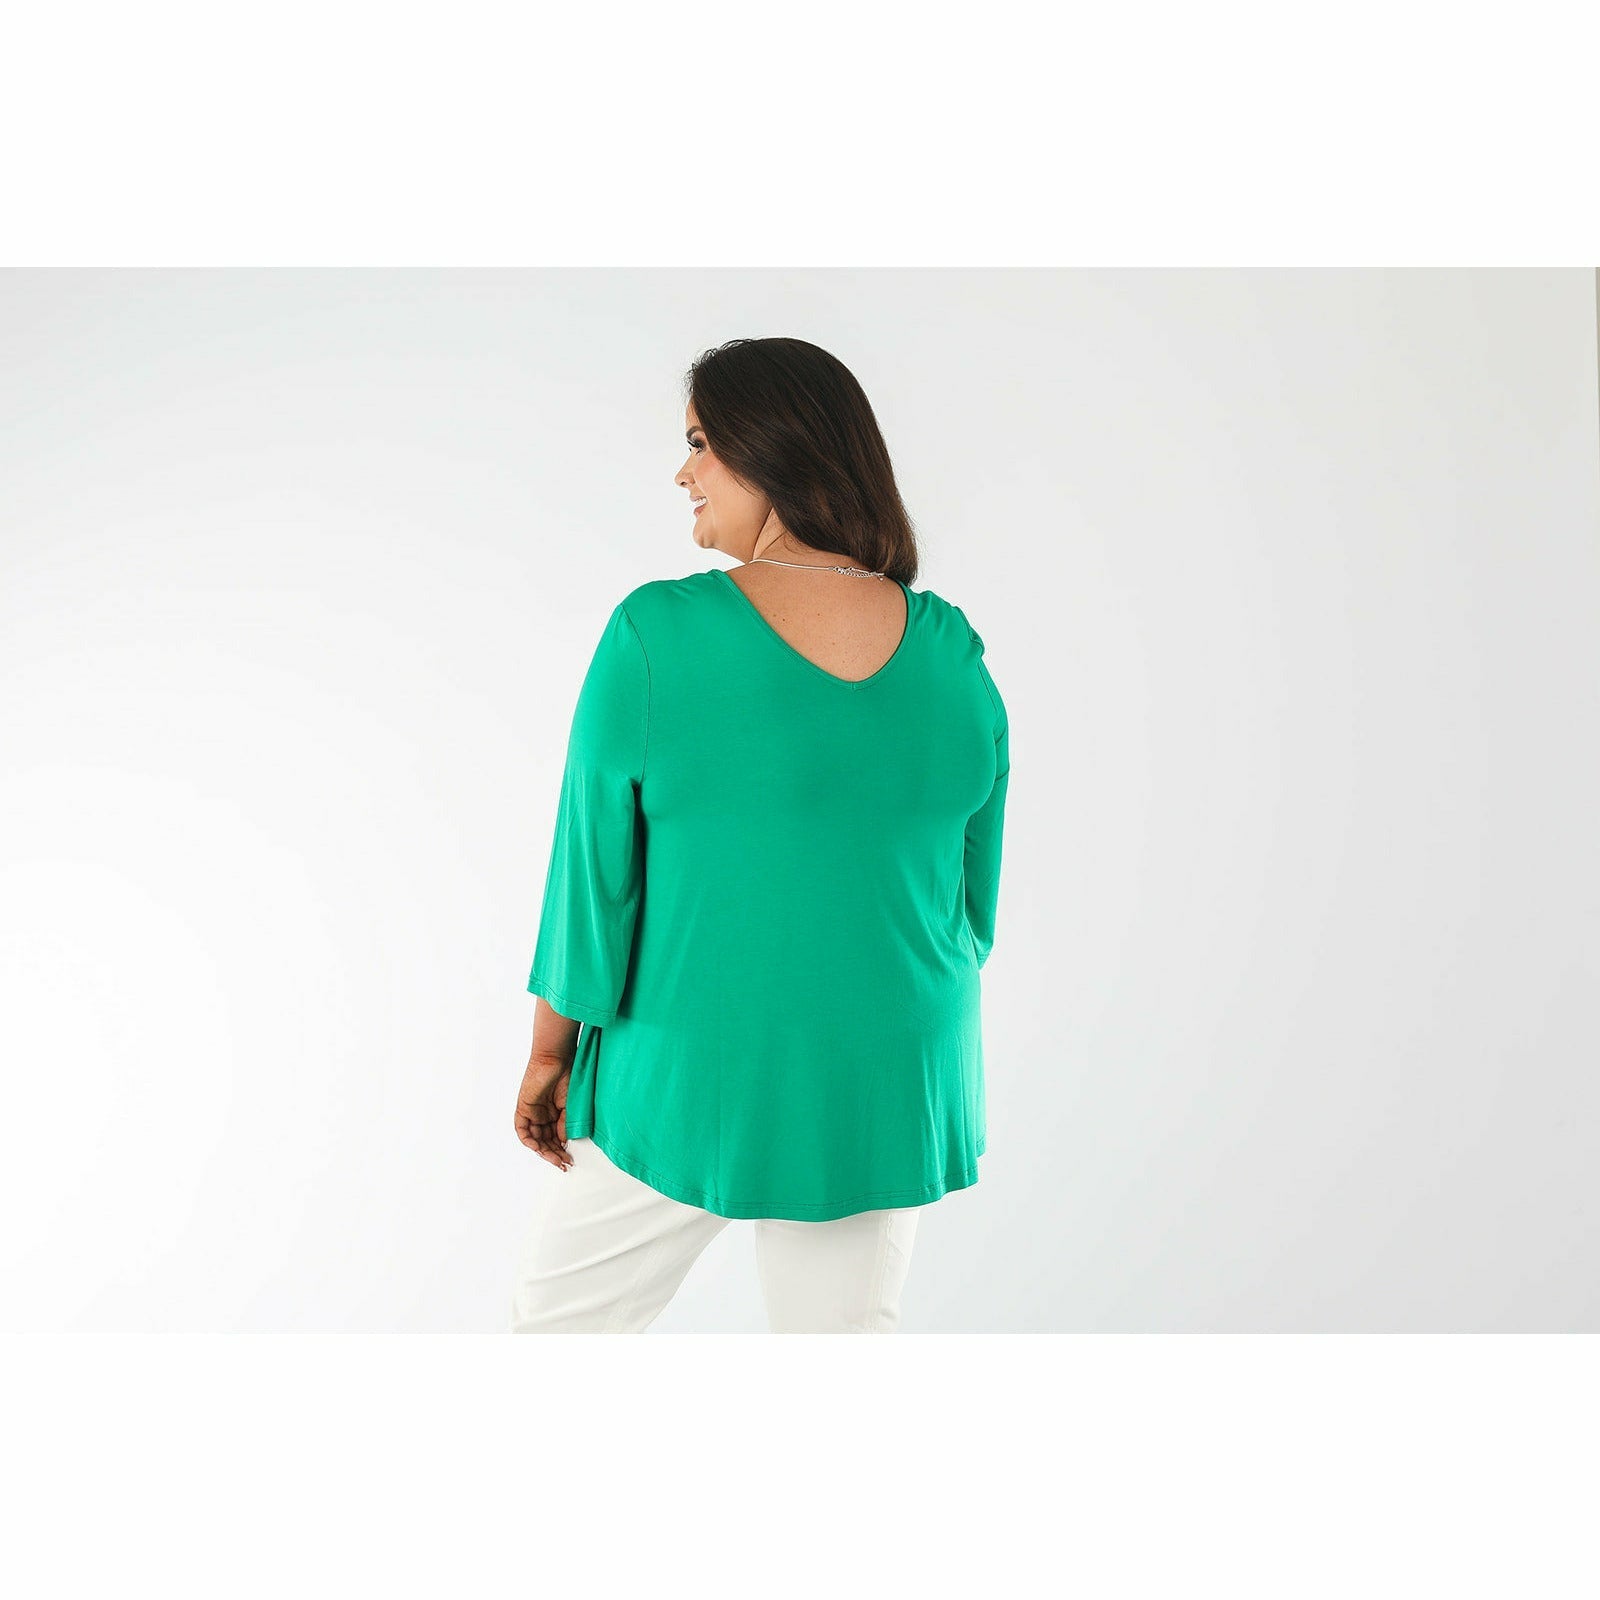 Mellomi Julie Reversible Top in Green - Wardrobe Plus